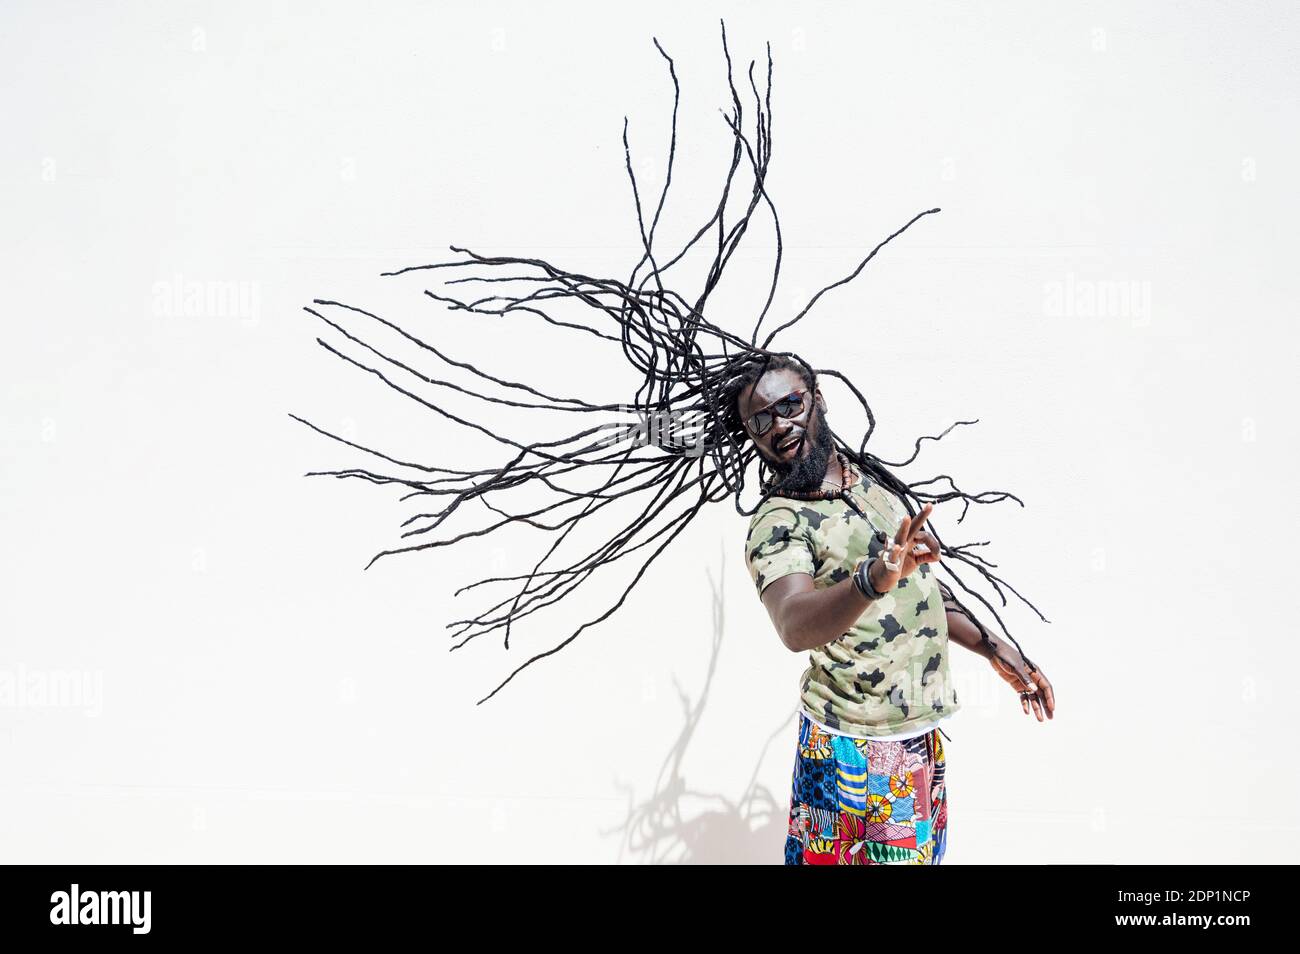 Rastafari man with sunglsasses tossing his dreadlocks Stock Photo